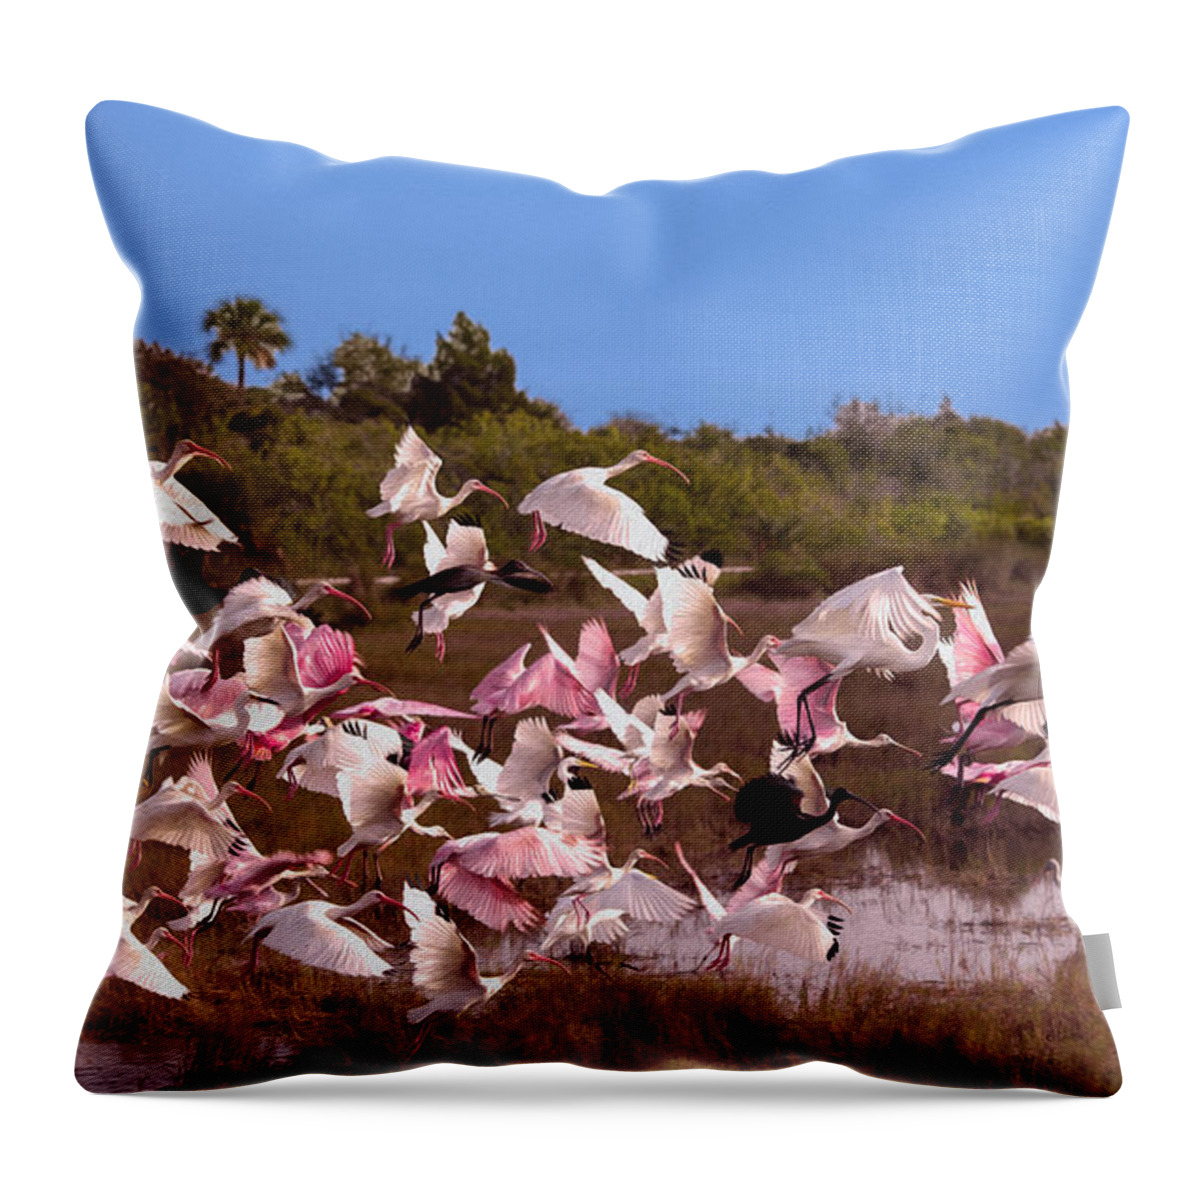 Birds Throw Pillow featuring the photograph Birds Call To Flight by John M Bailey